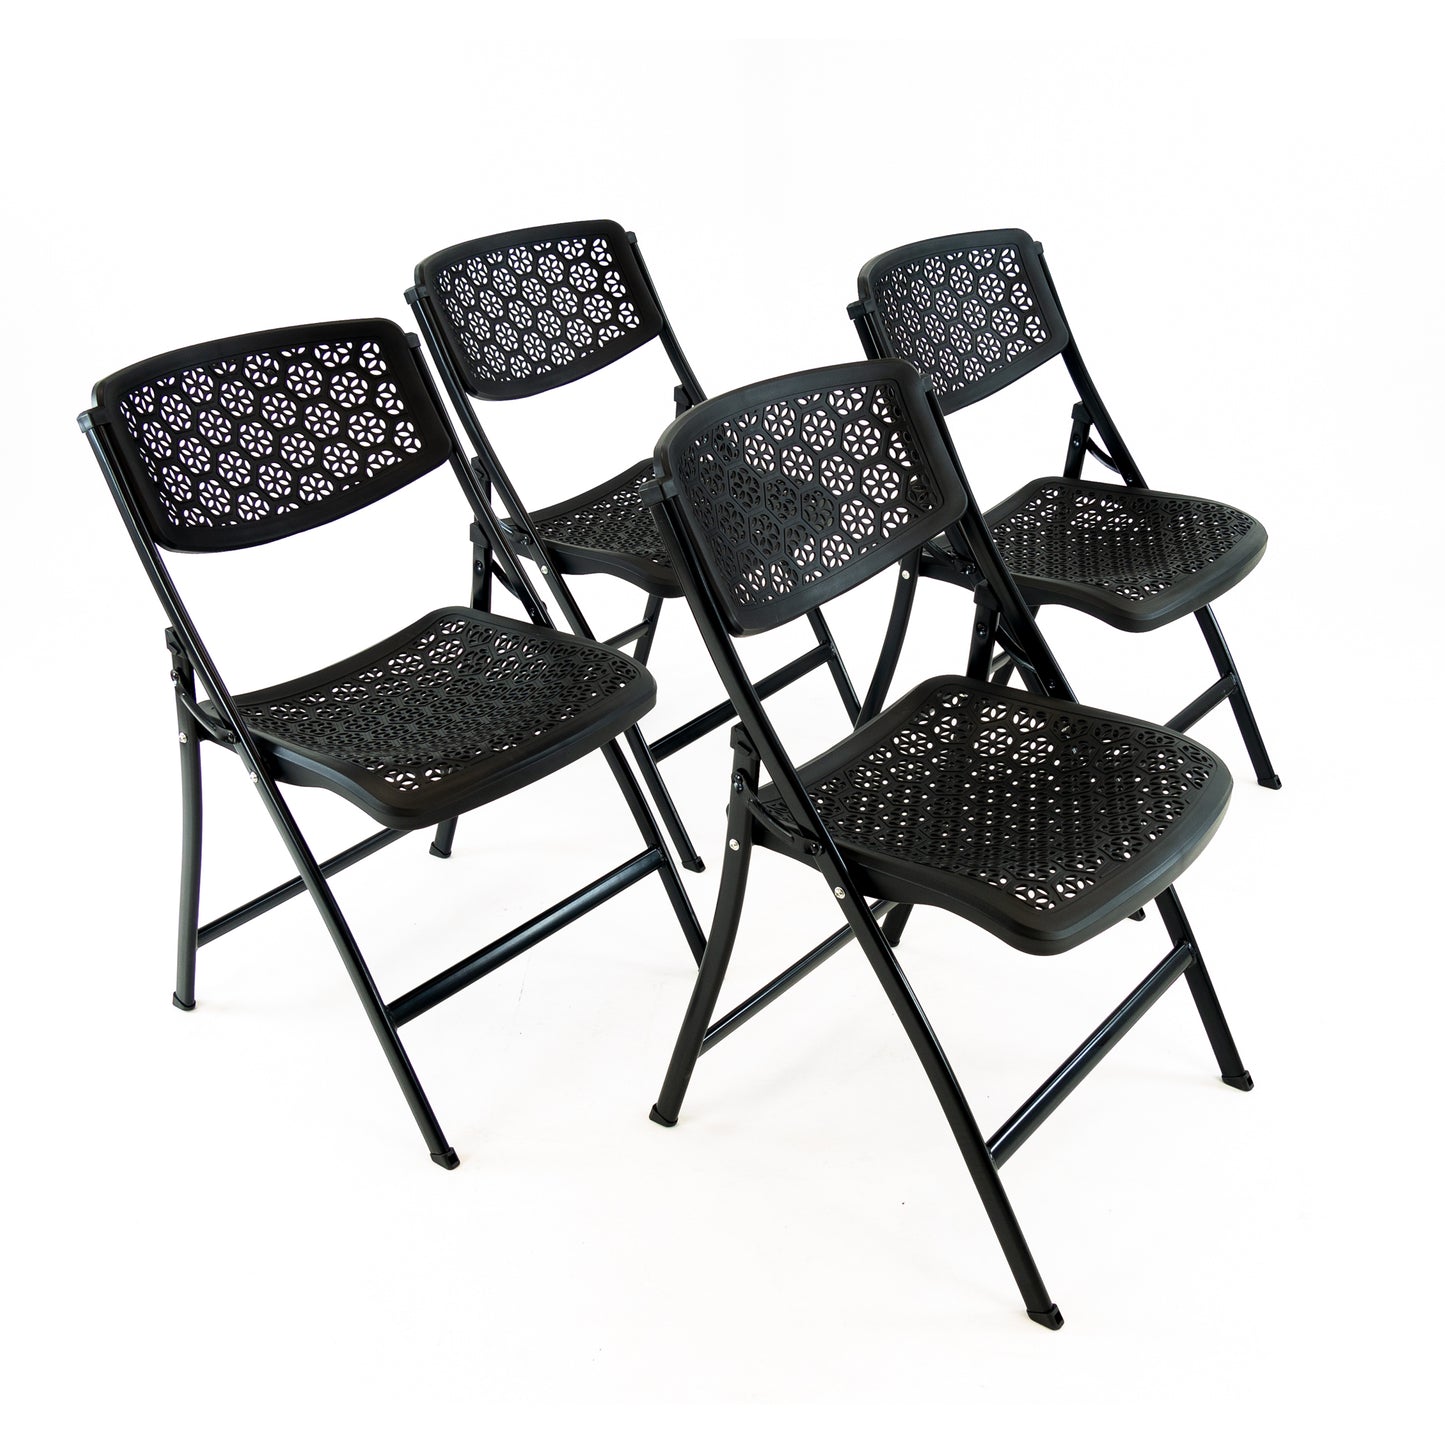 Honeycomb Picnic Folding Chairs - Black